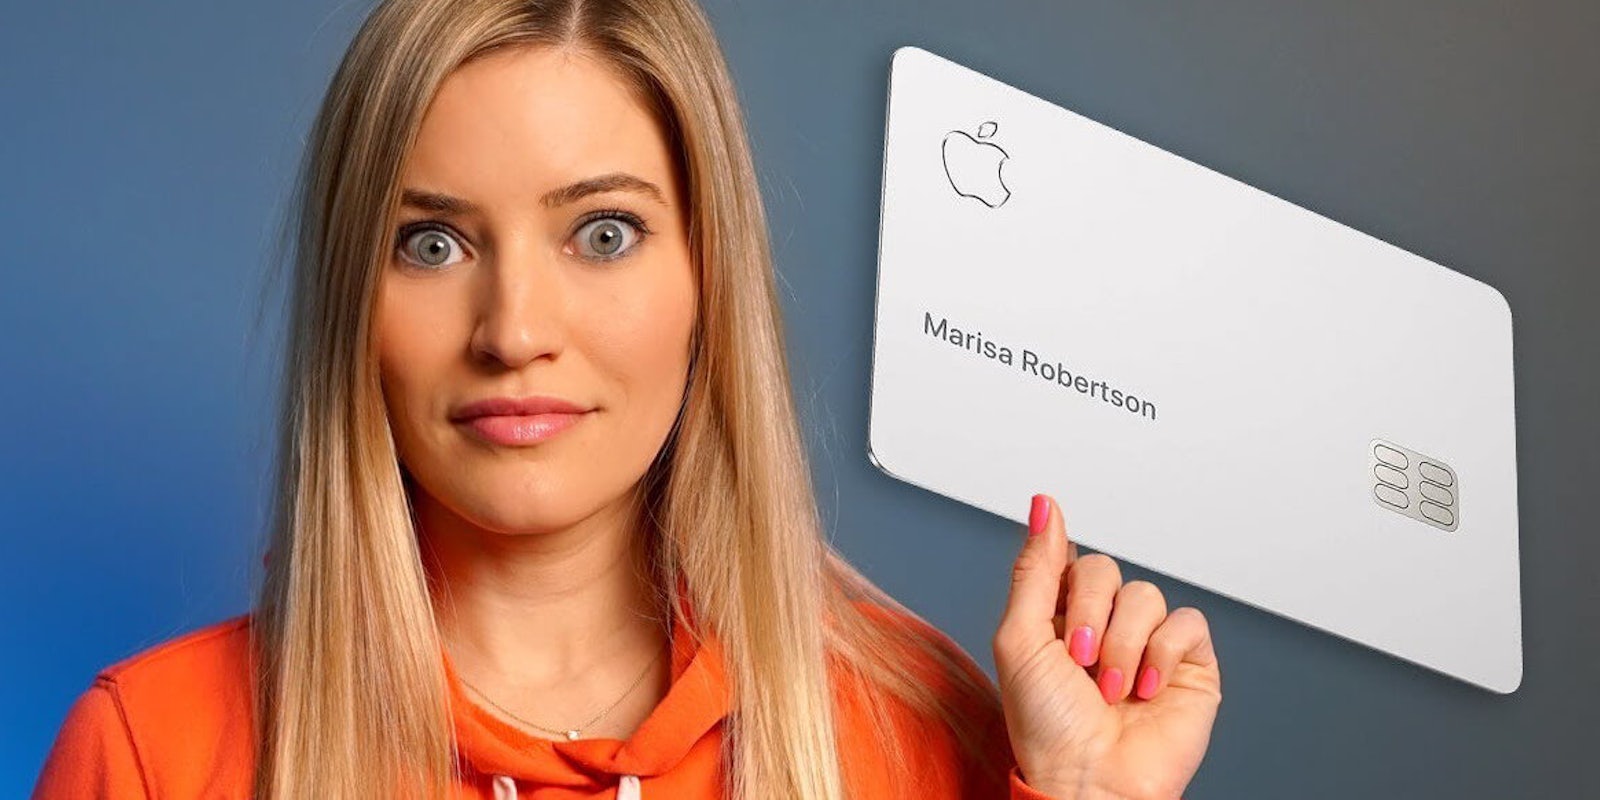 apple card sexist